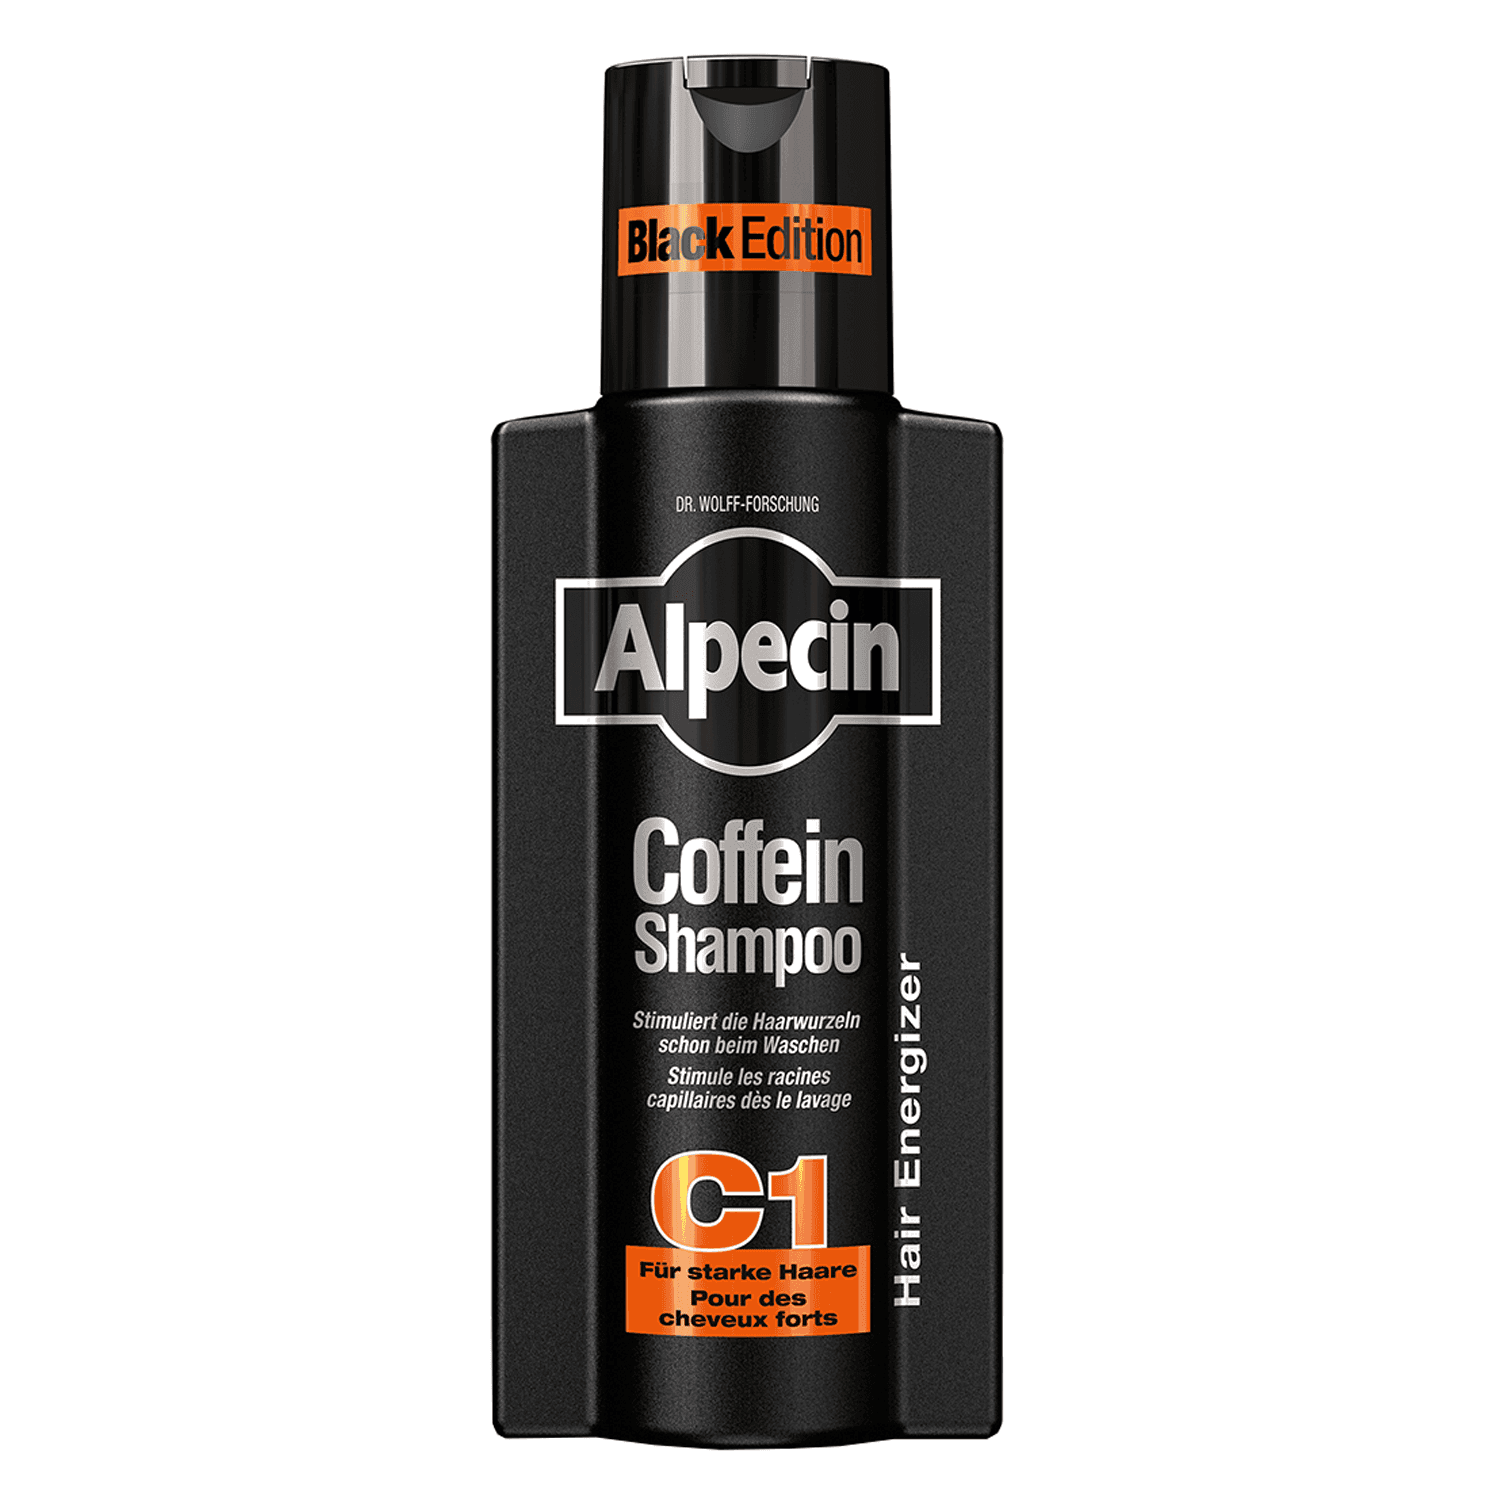 Alpecin - Caffeine Shampoo C1 Black Edition